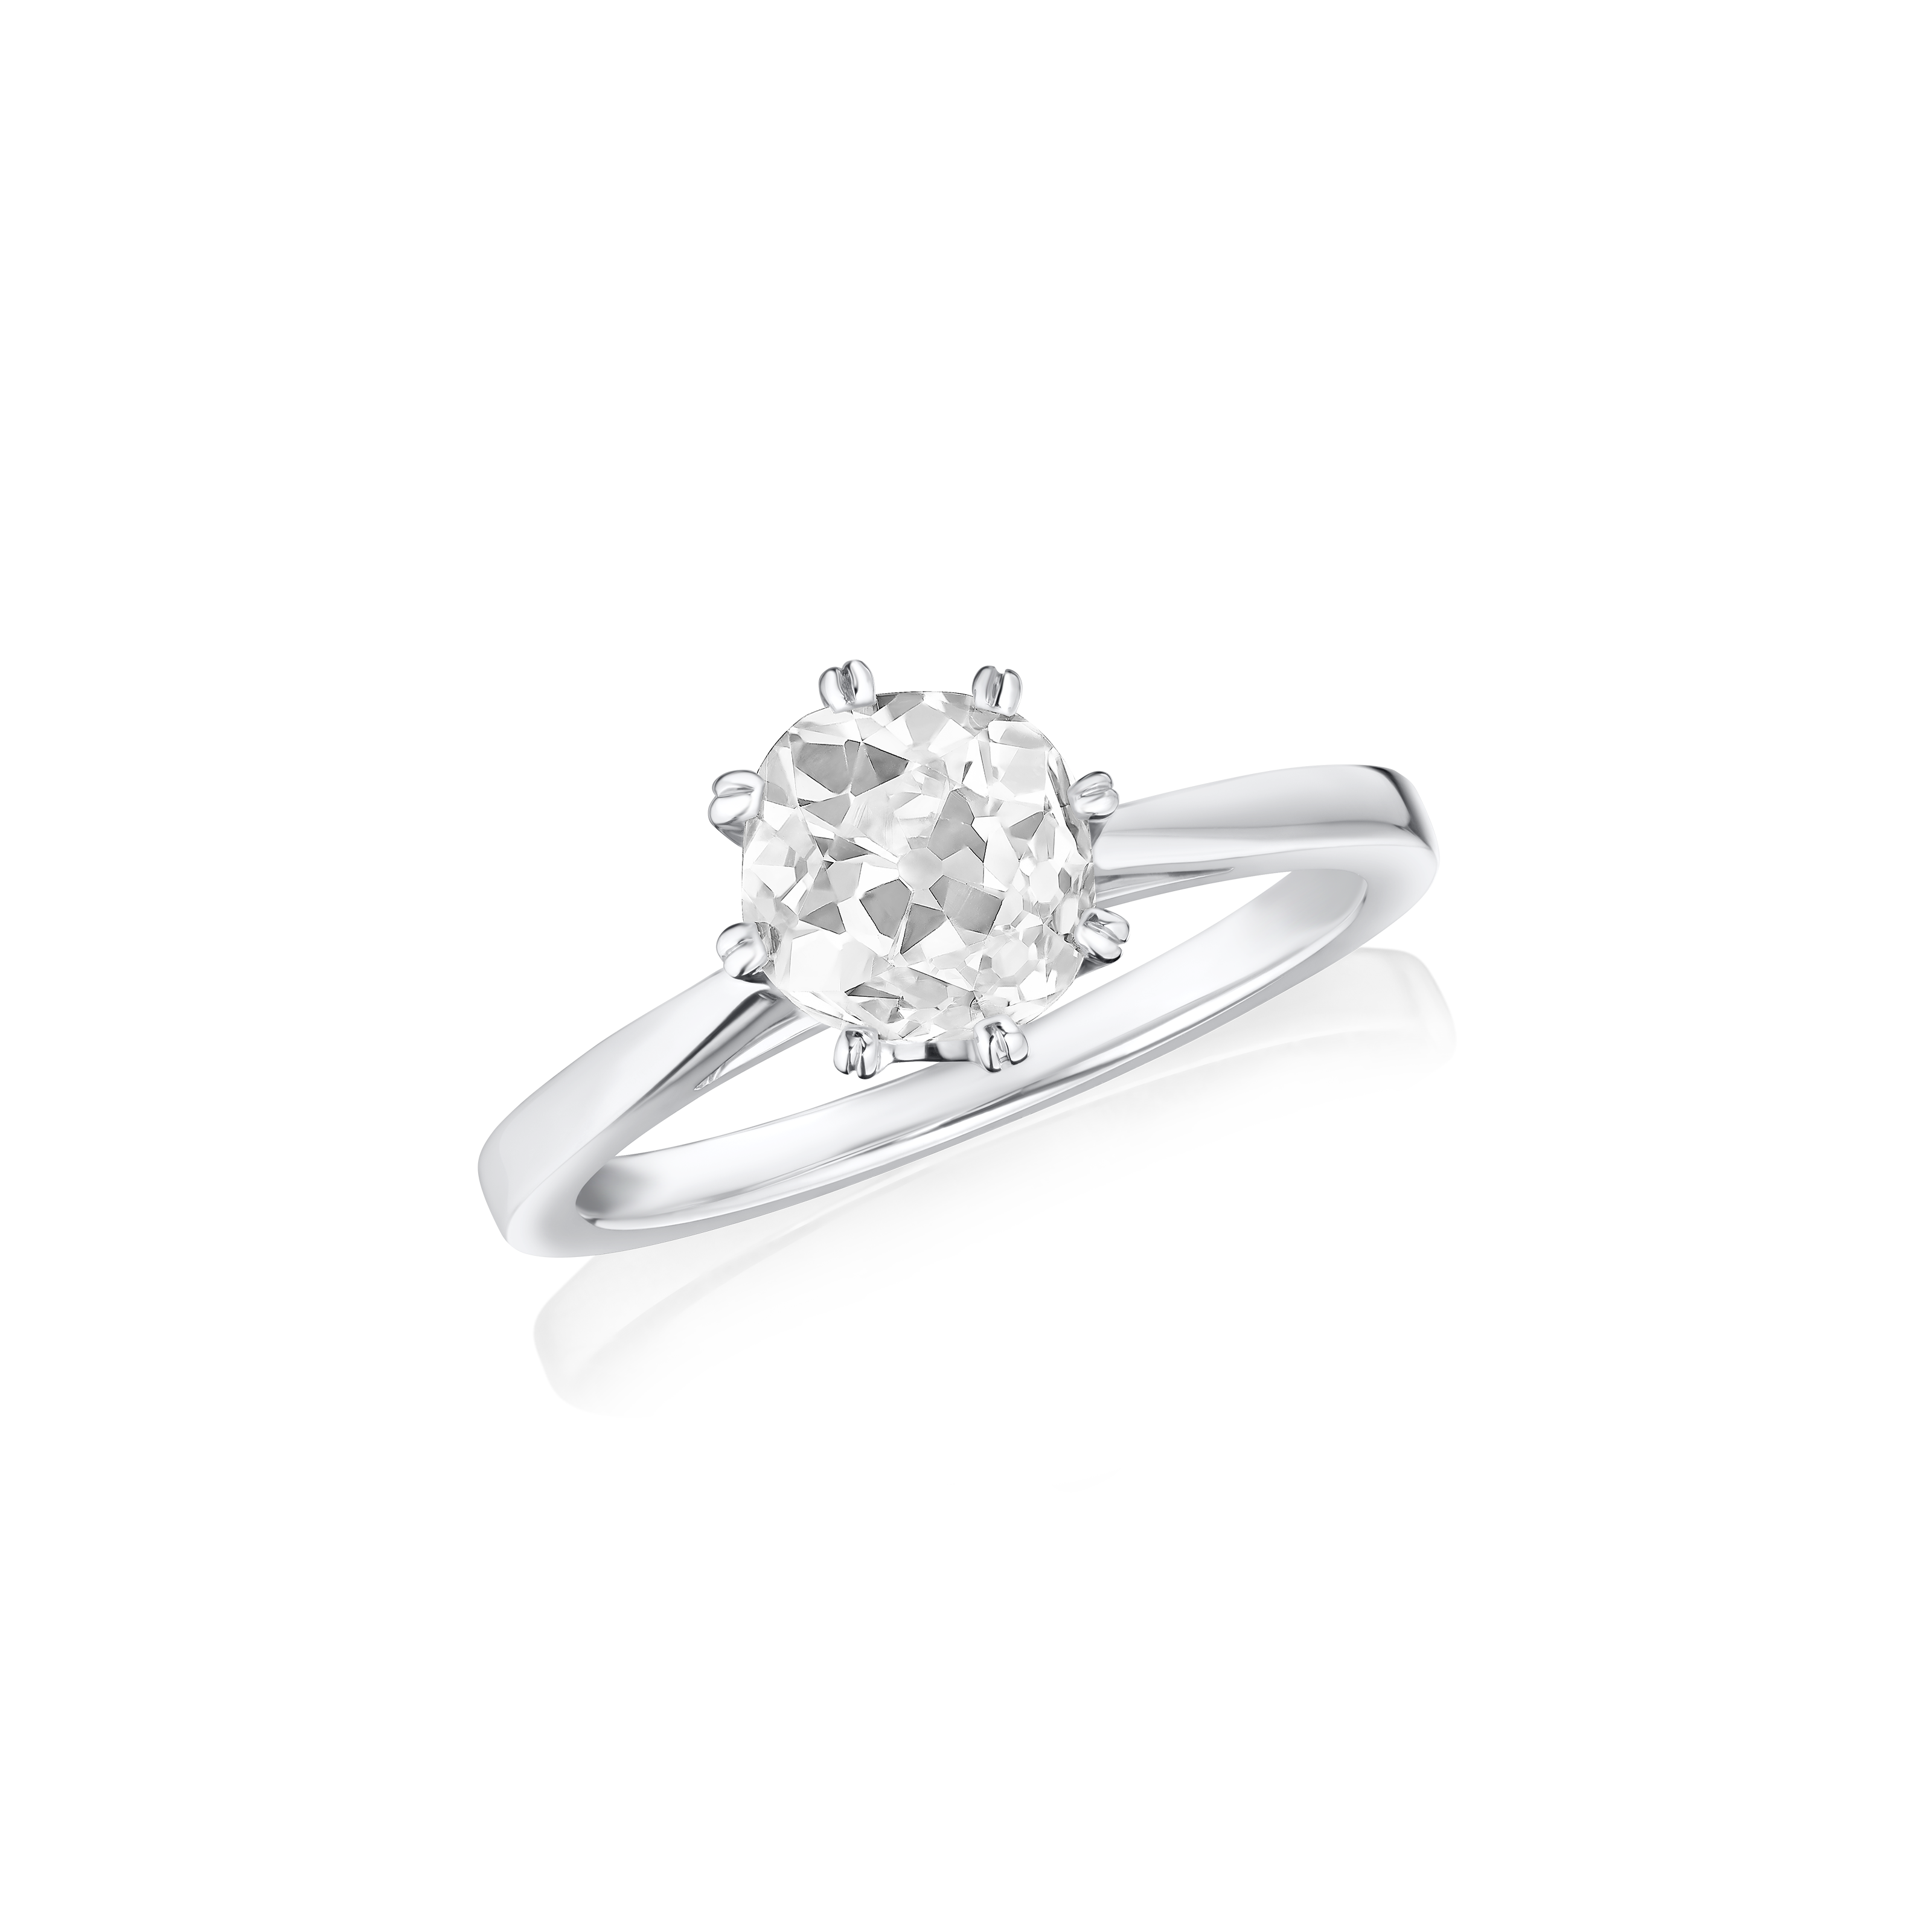 1.63cts Old-Cut Diamond Platinum Engagement Ring